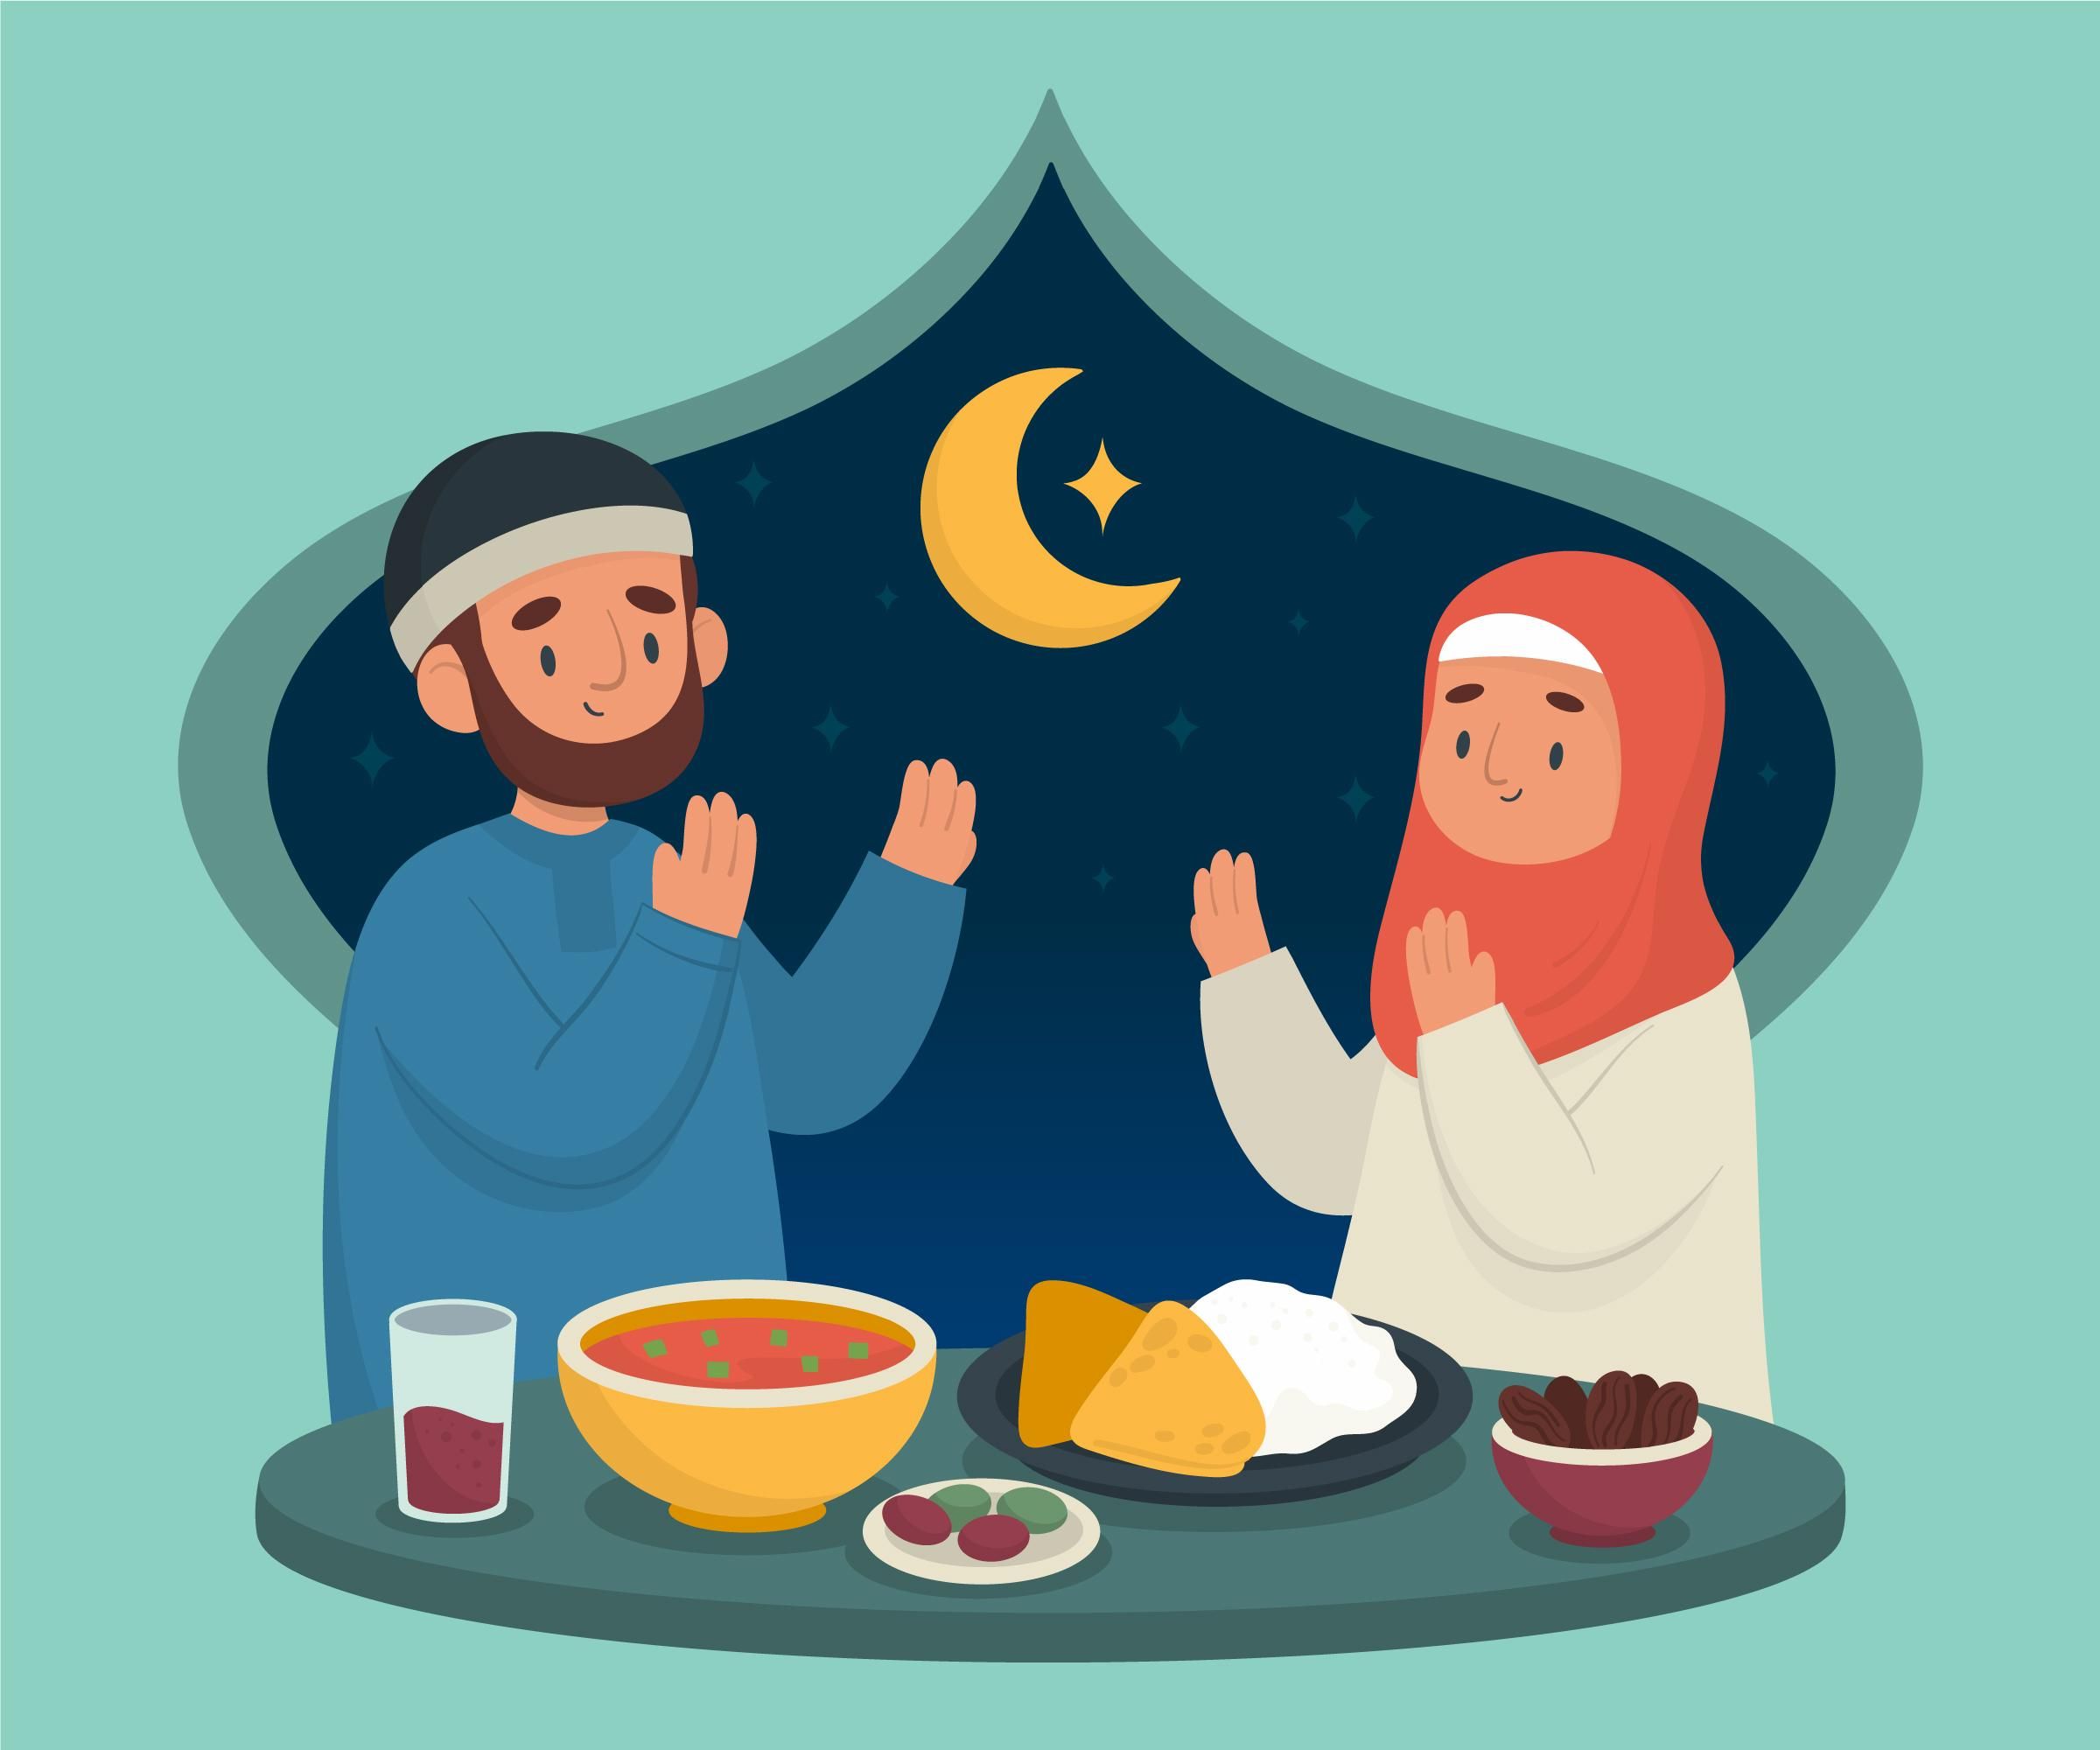 Разговление рамадан. Ифтар мусульманский. Рамадан. Ифтар иллюстрации. Мусульманская семья.